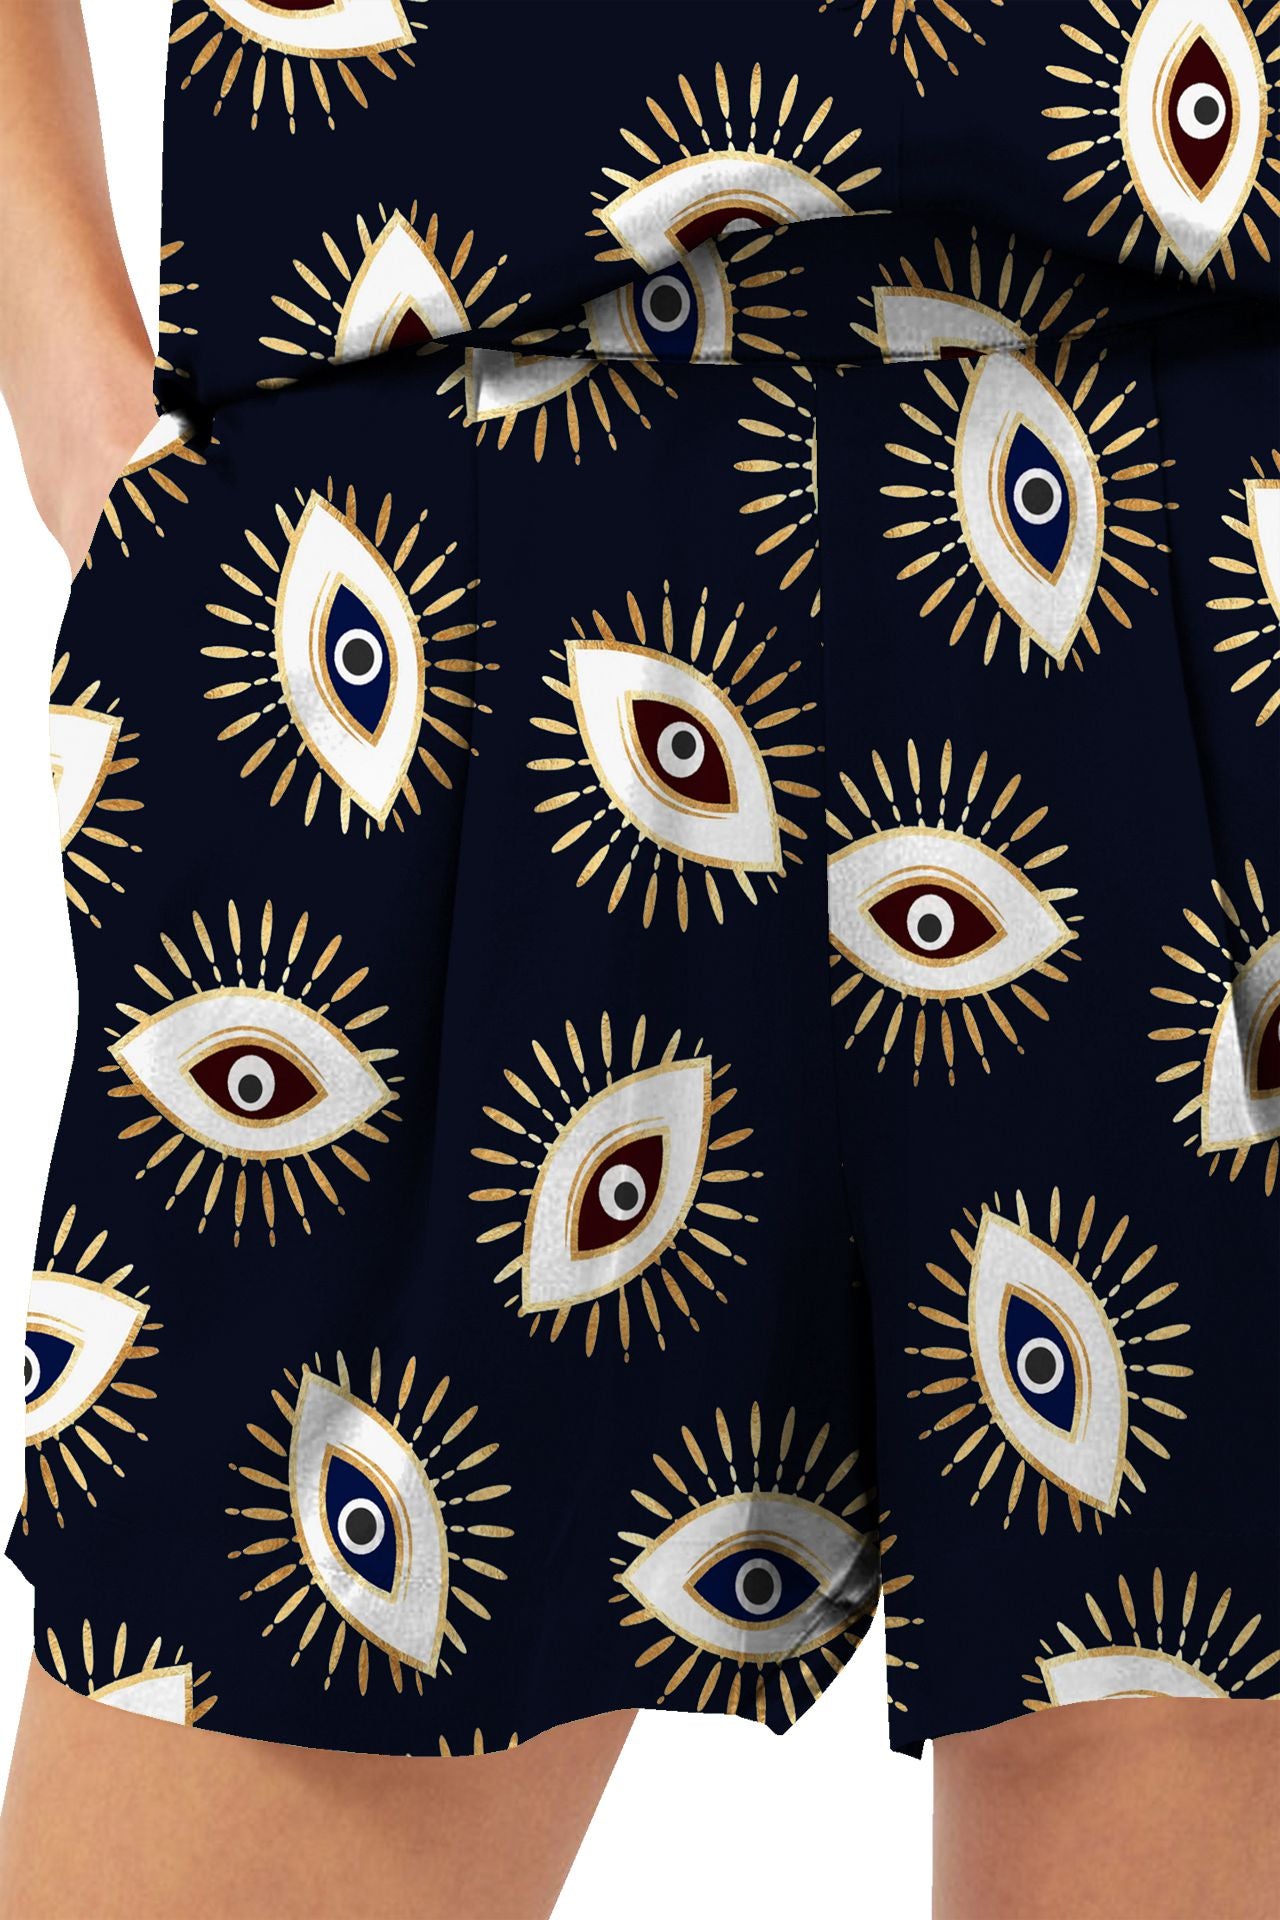 "evil eye shorts" "Kyle X Shahida" "shorts with print" "womens patterned shorts"